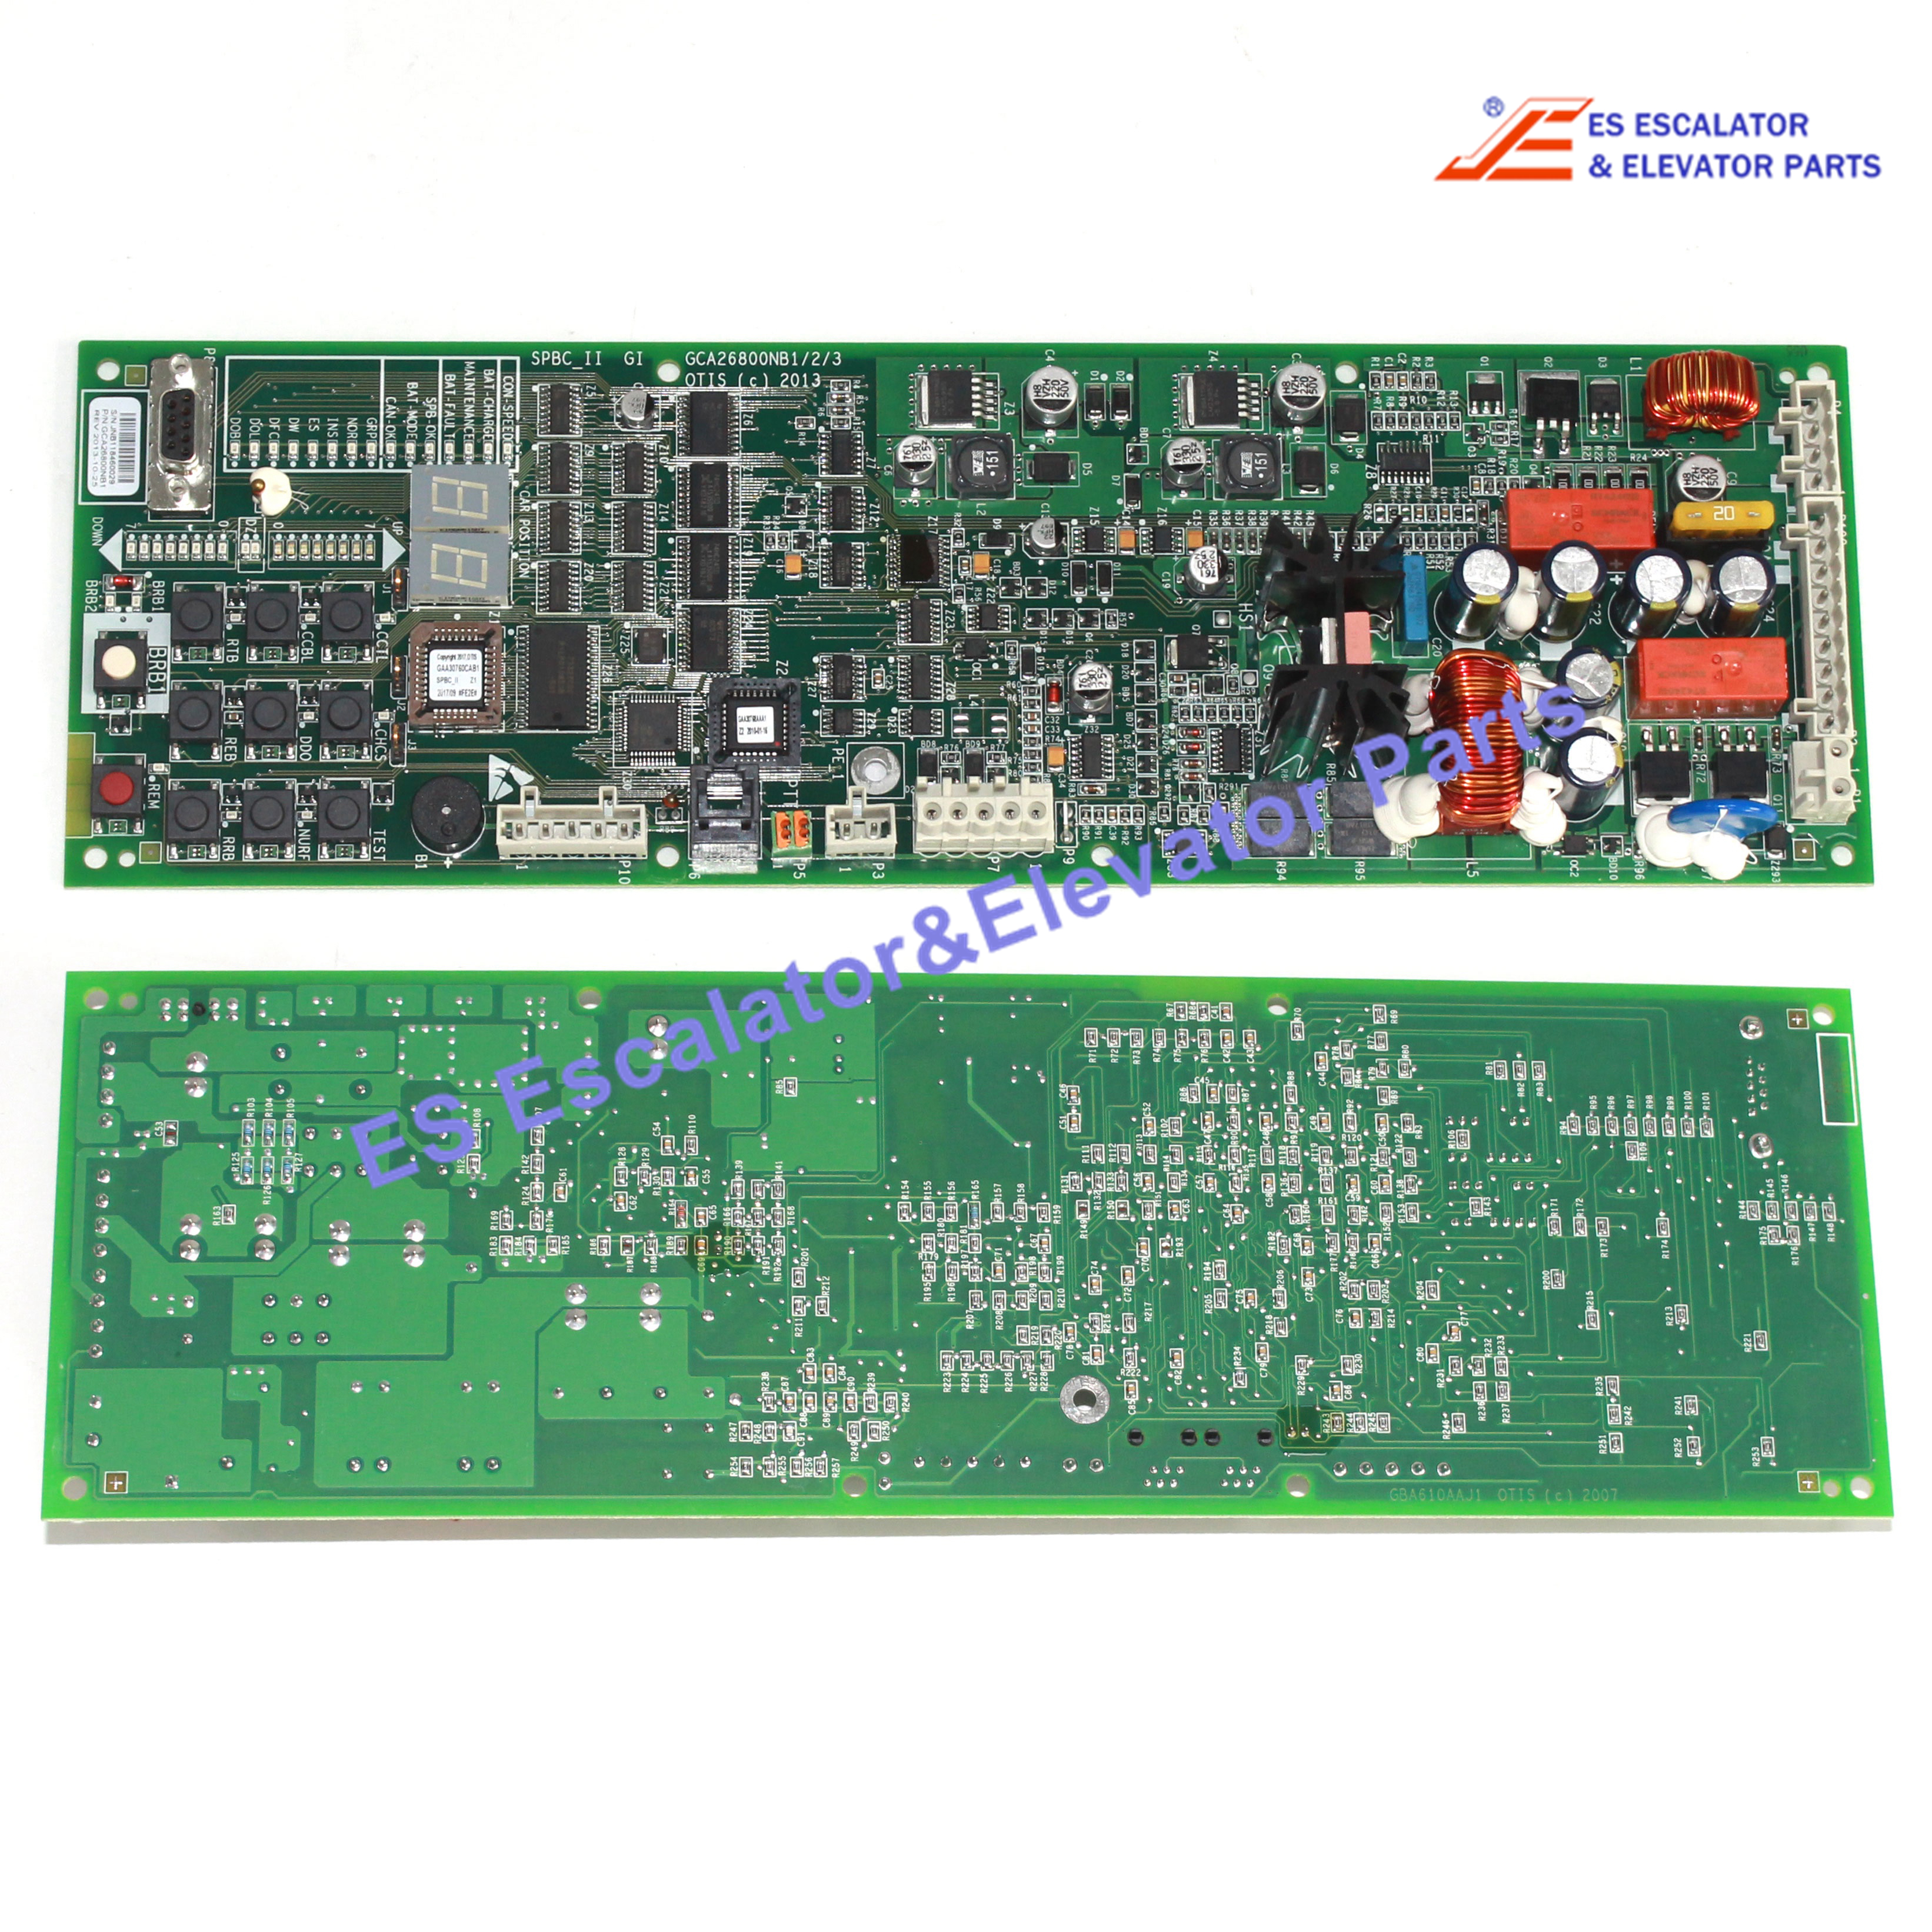 SPBC-II Board GCA26800NB4 Elevator PCB Board  SPBC-II Board Use For Otis